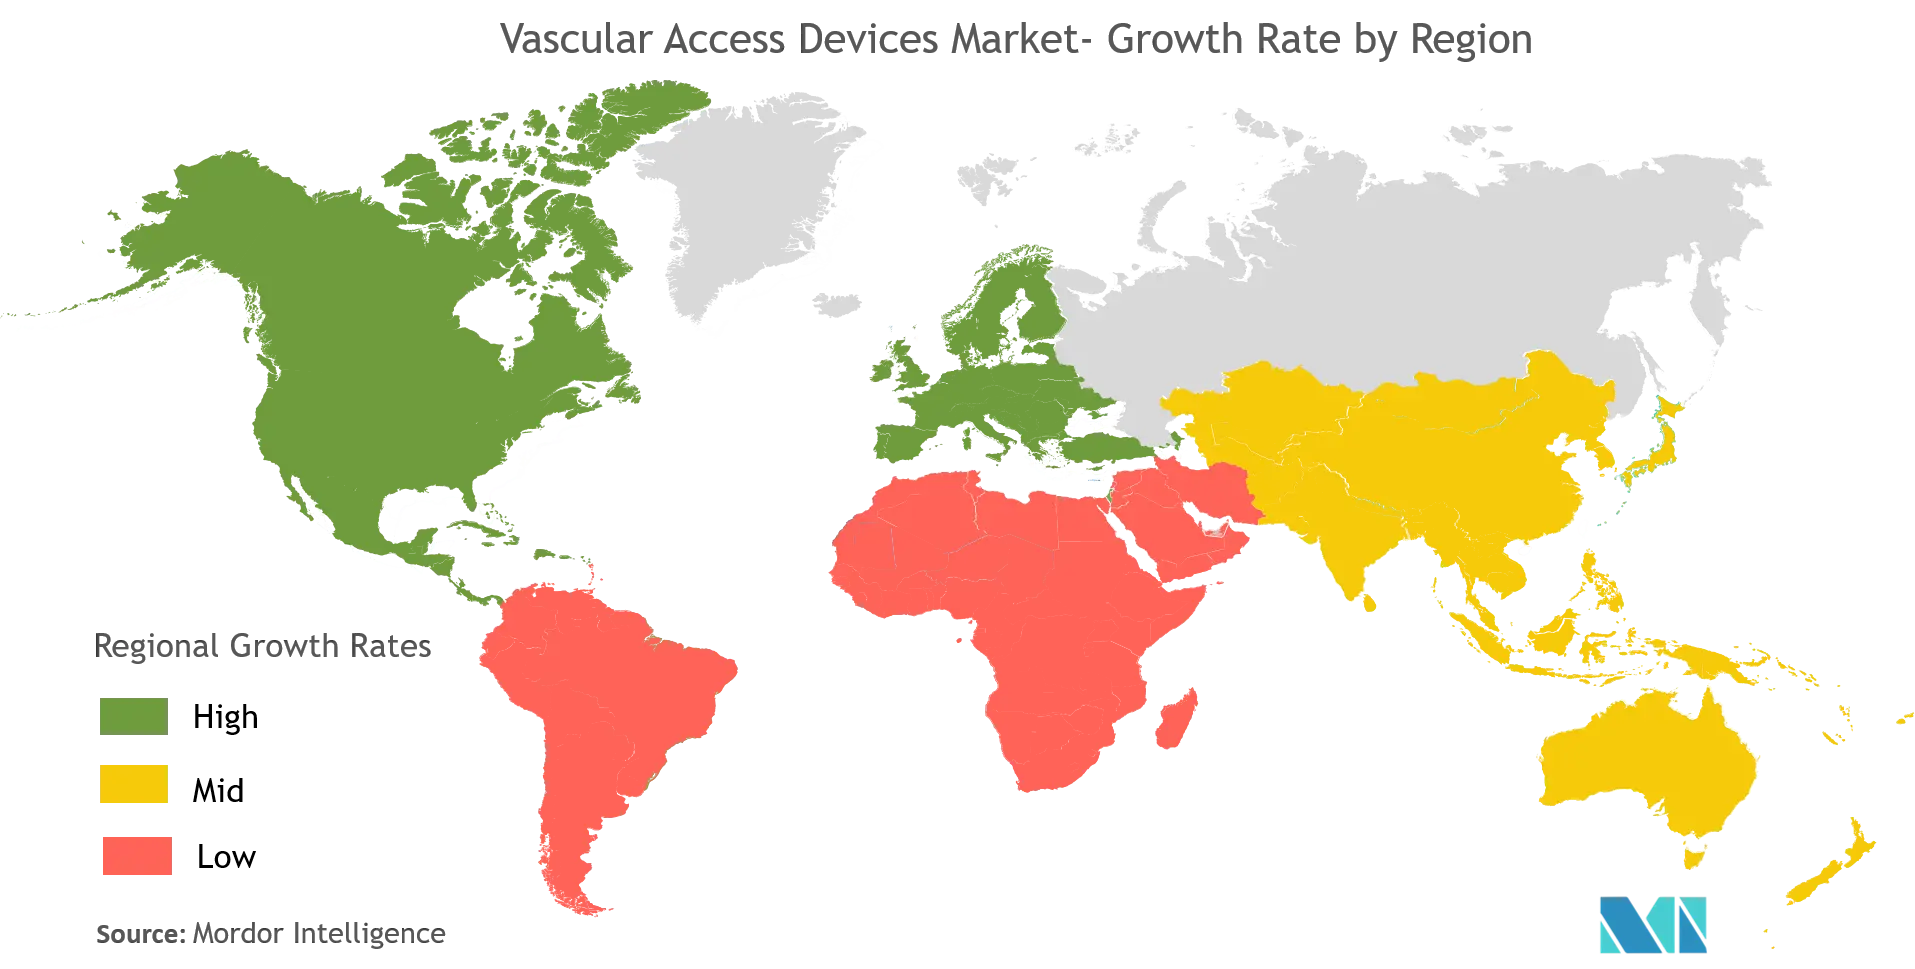 Vascular Access Devices Market Analysis